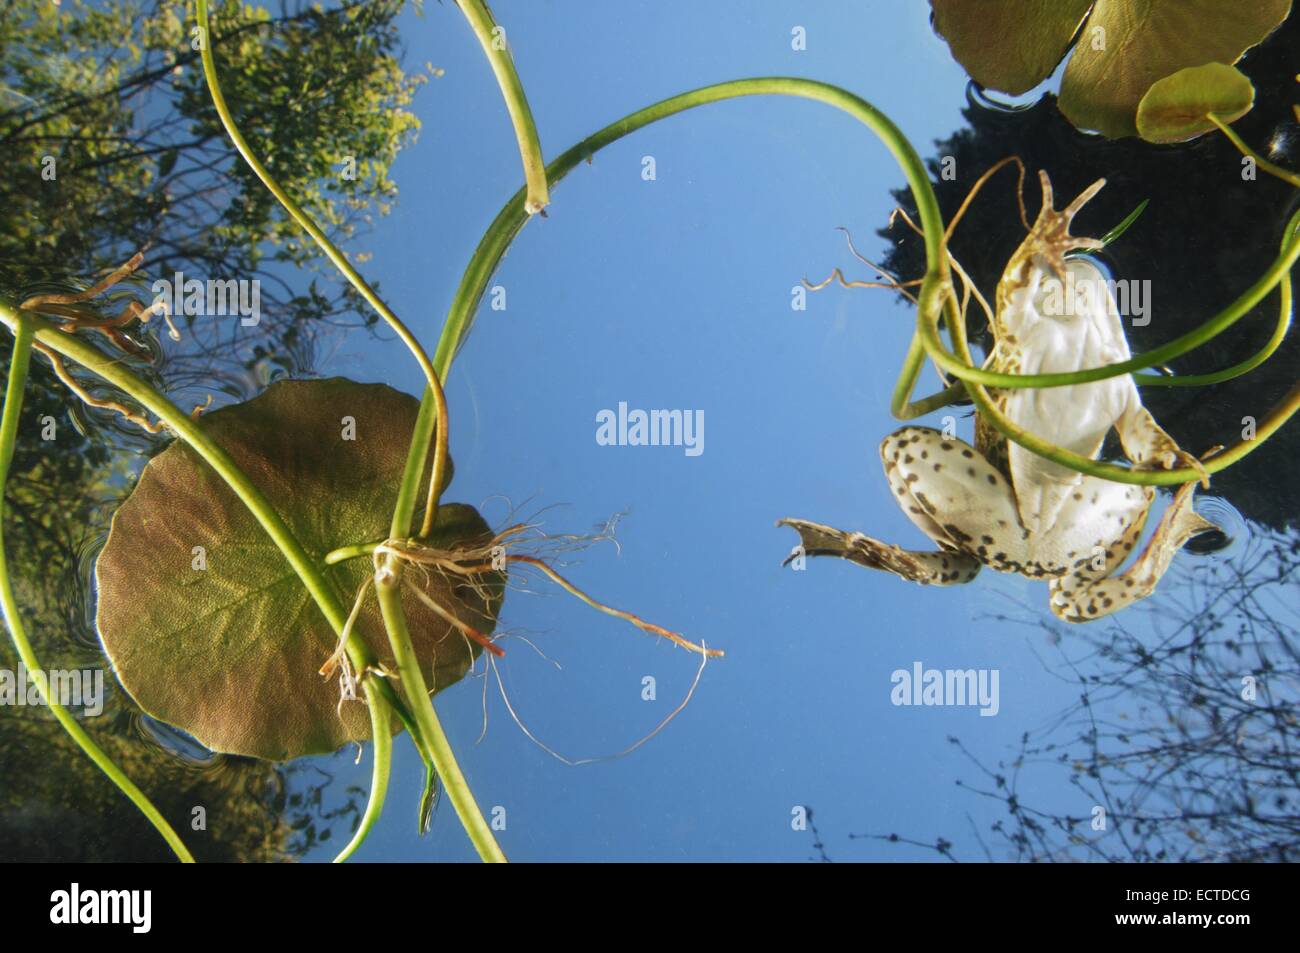 Rana di palude (Rana ridibunda - Pelophylax ridibundus) galleggianti in superficie tra waterlilies vista subacquea Foto Stock